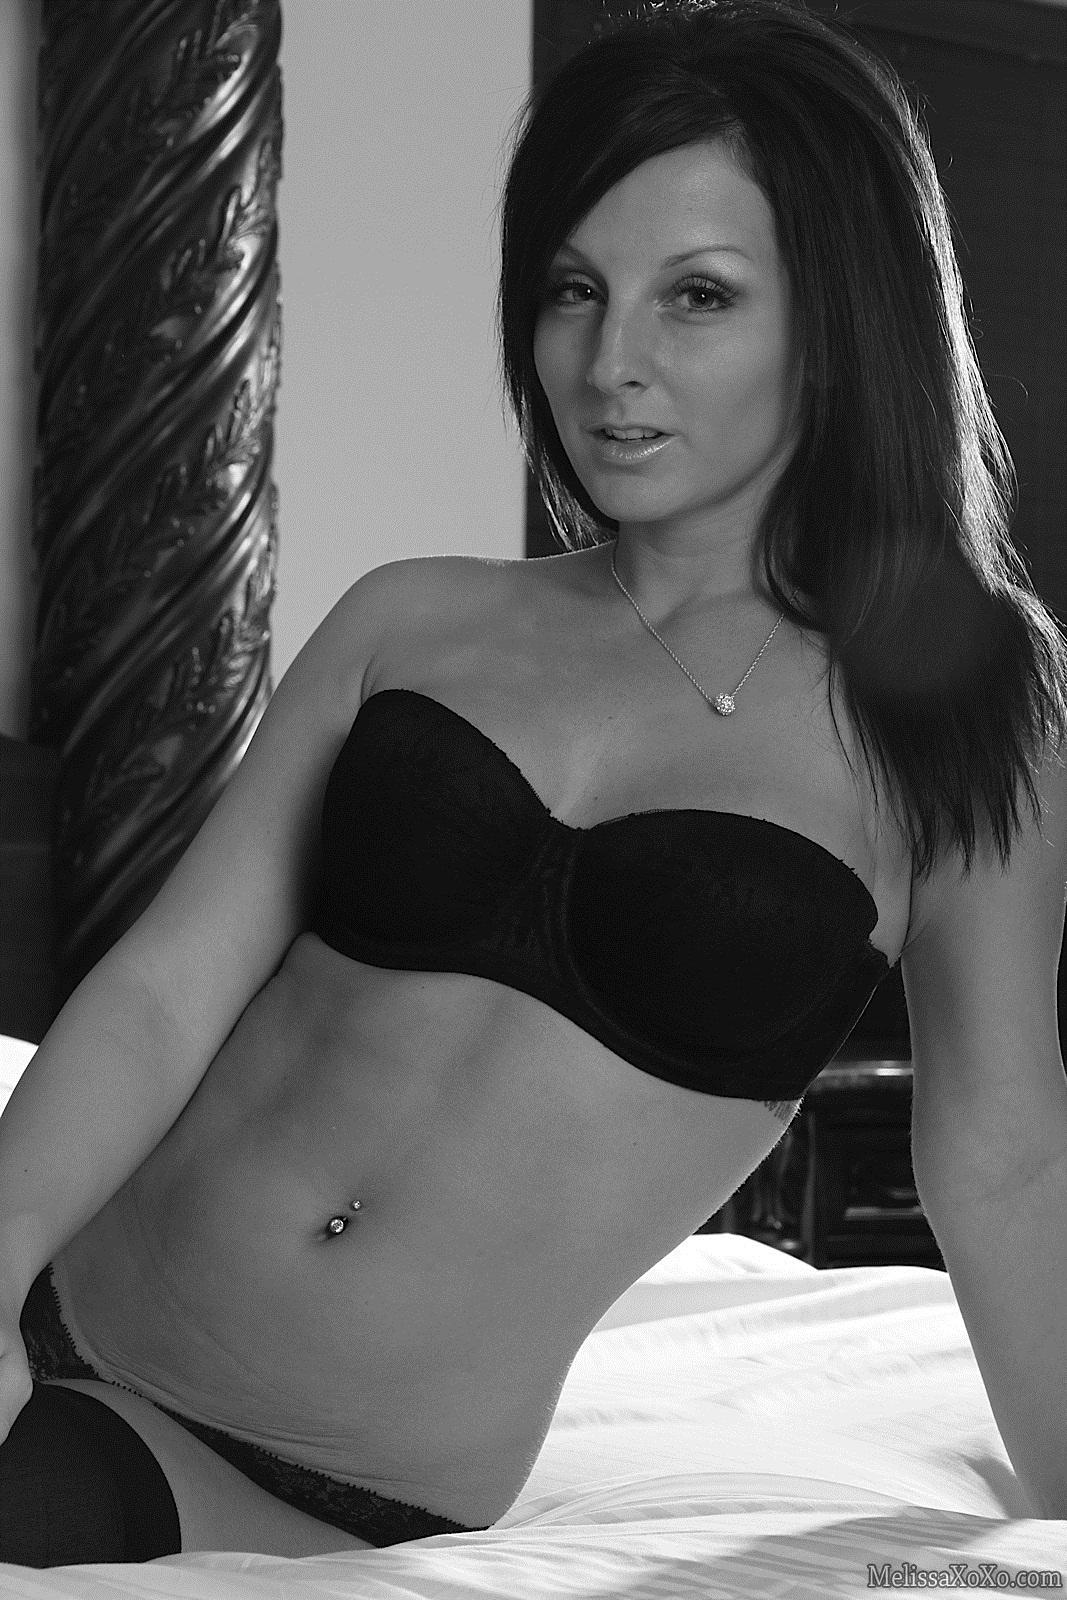 Melissa xoxo sexuelle en noir et blanc
 #59485177